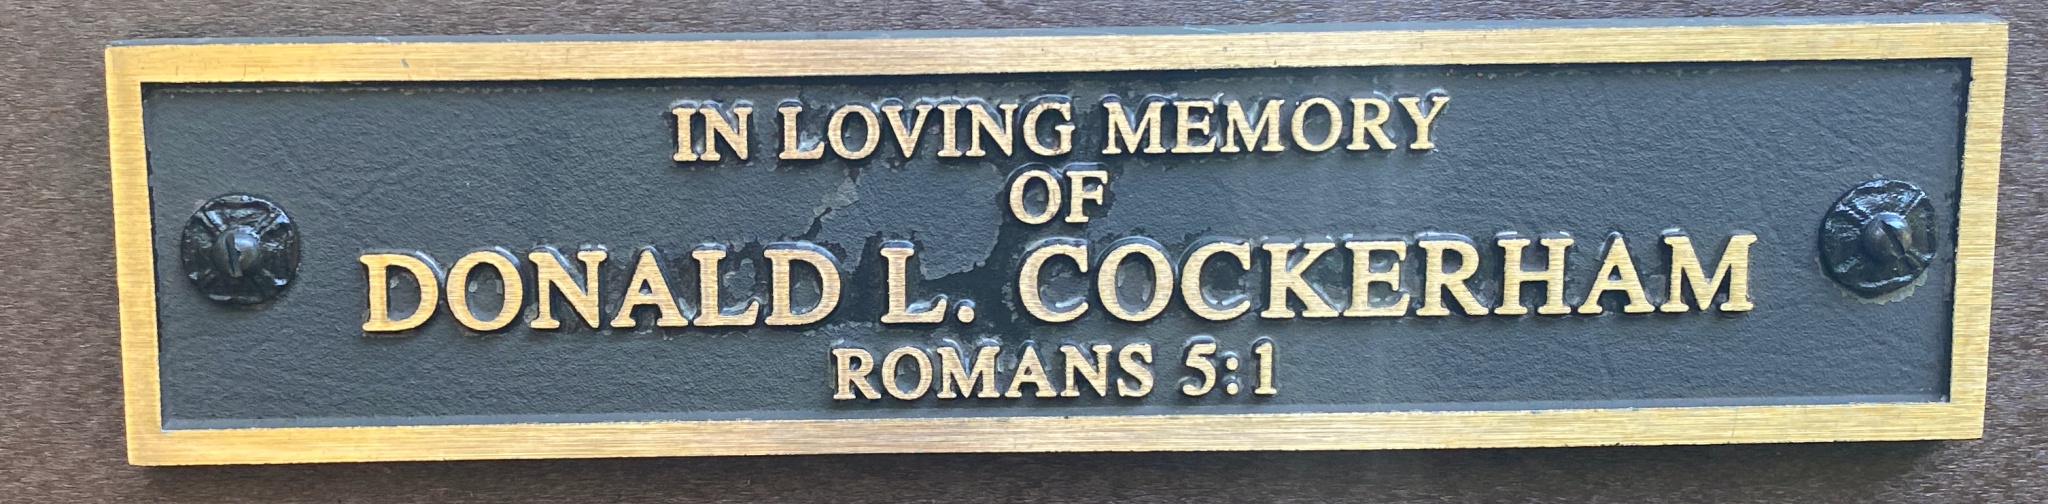 IN LOVING MEMORY OF DONALD L. COCKERHAM ROMANS 5:1